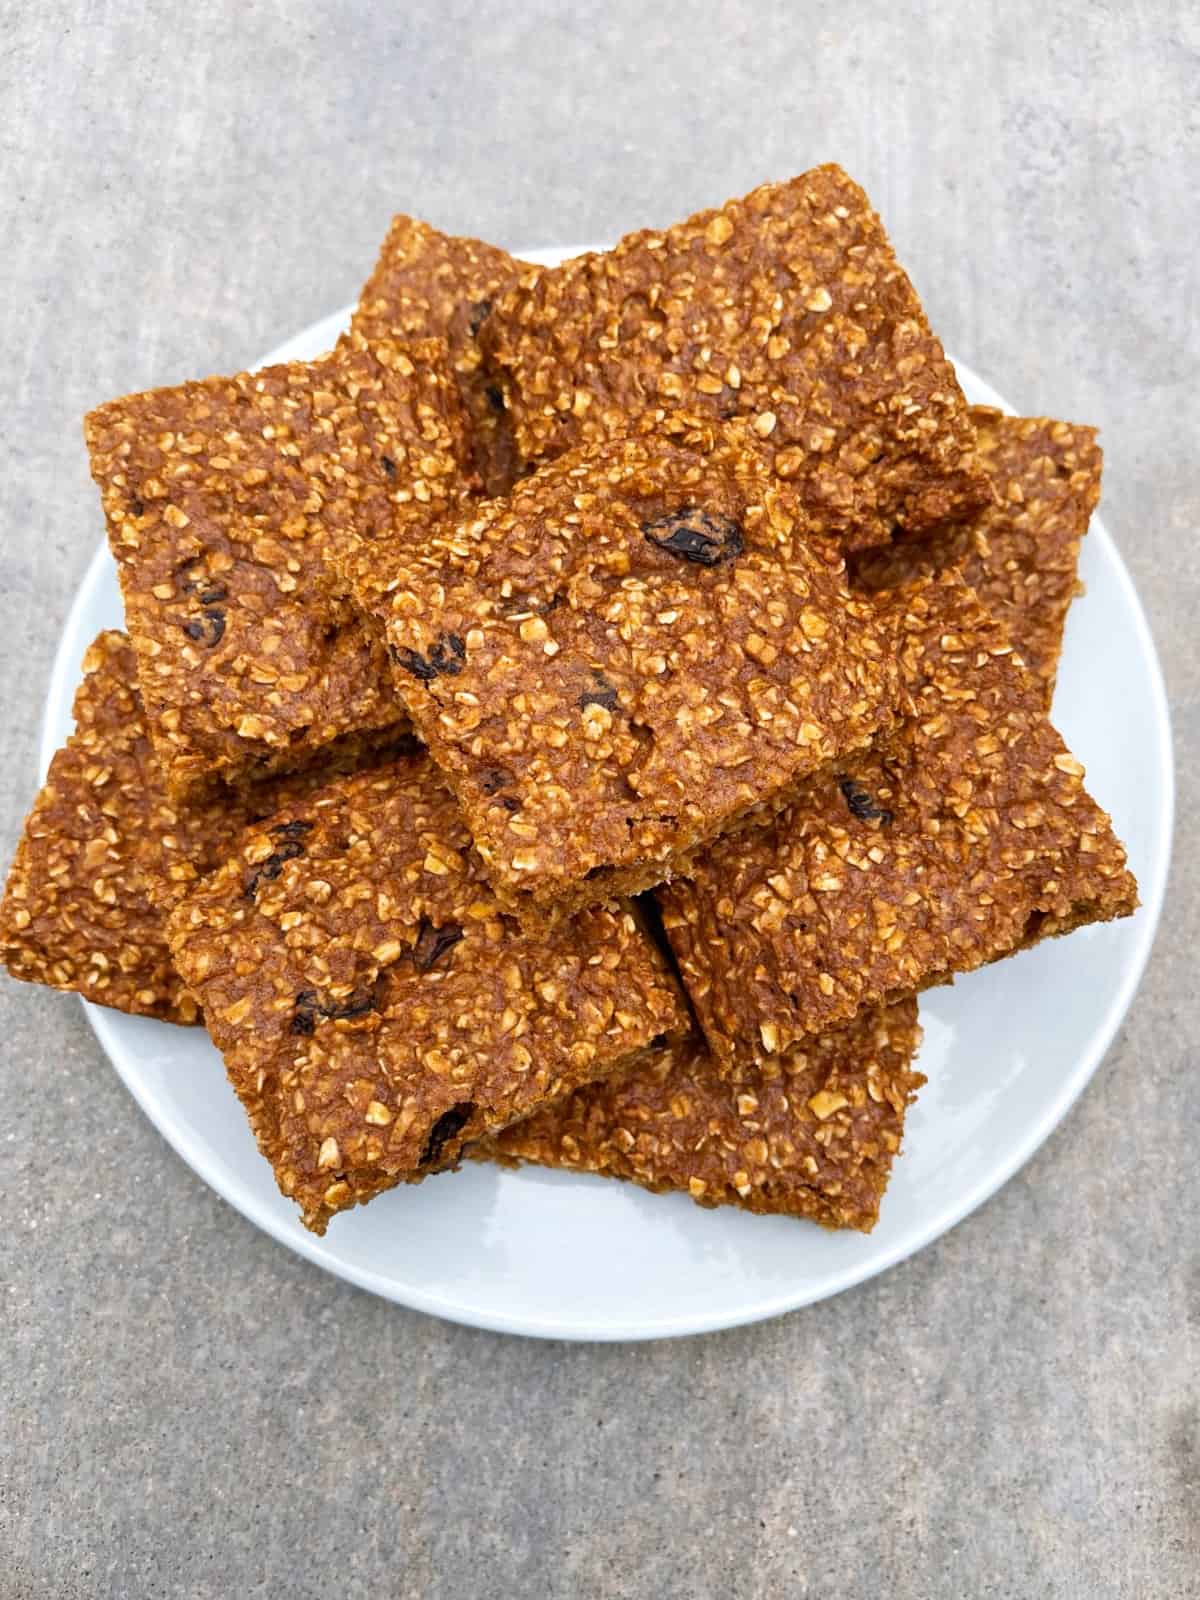 Stack of baked cinnamon-raisin oatmeal squares on serving platter.